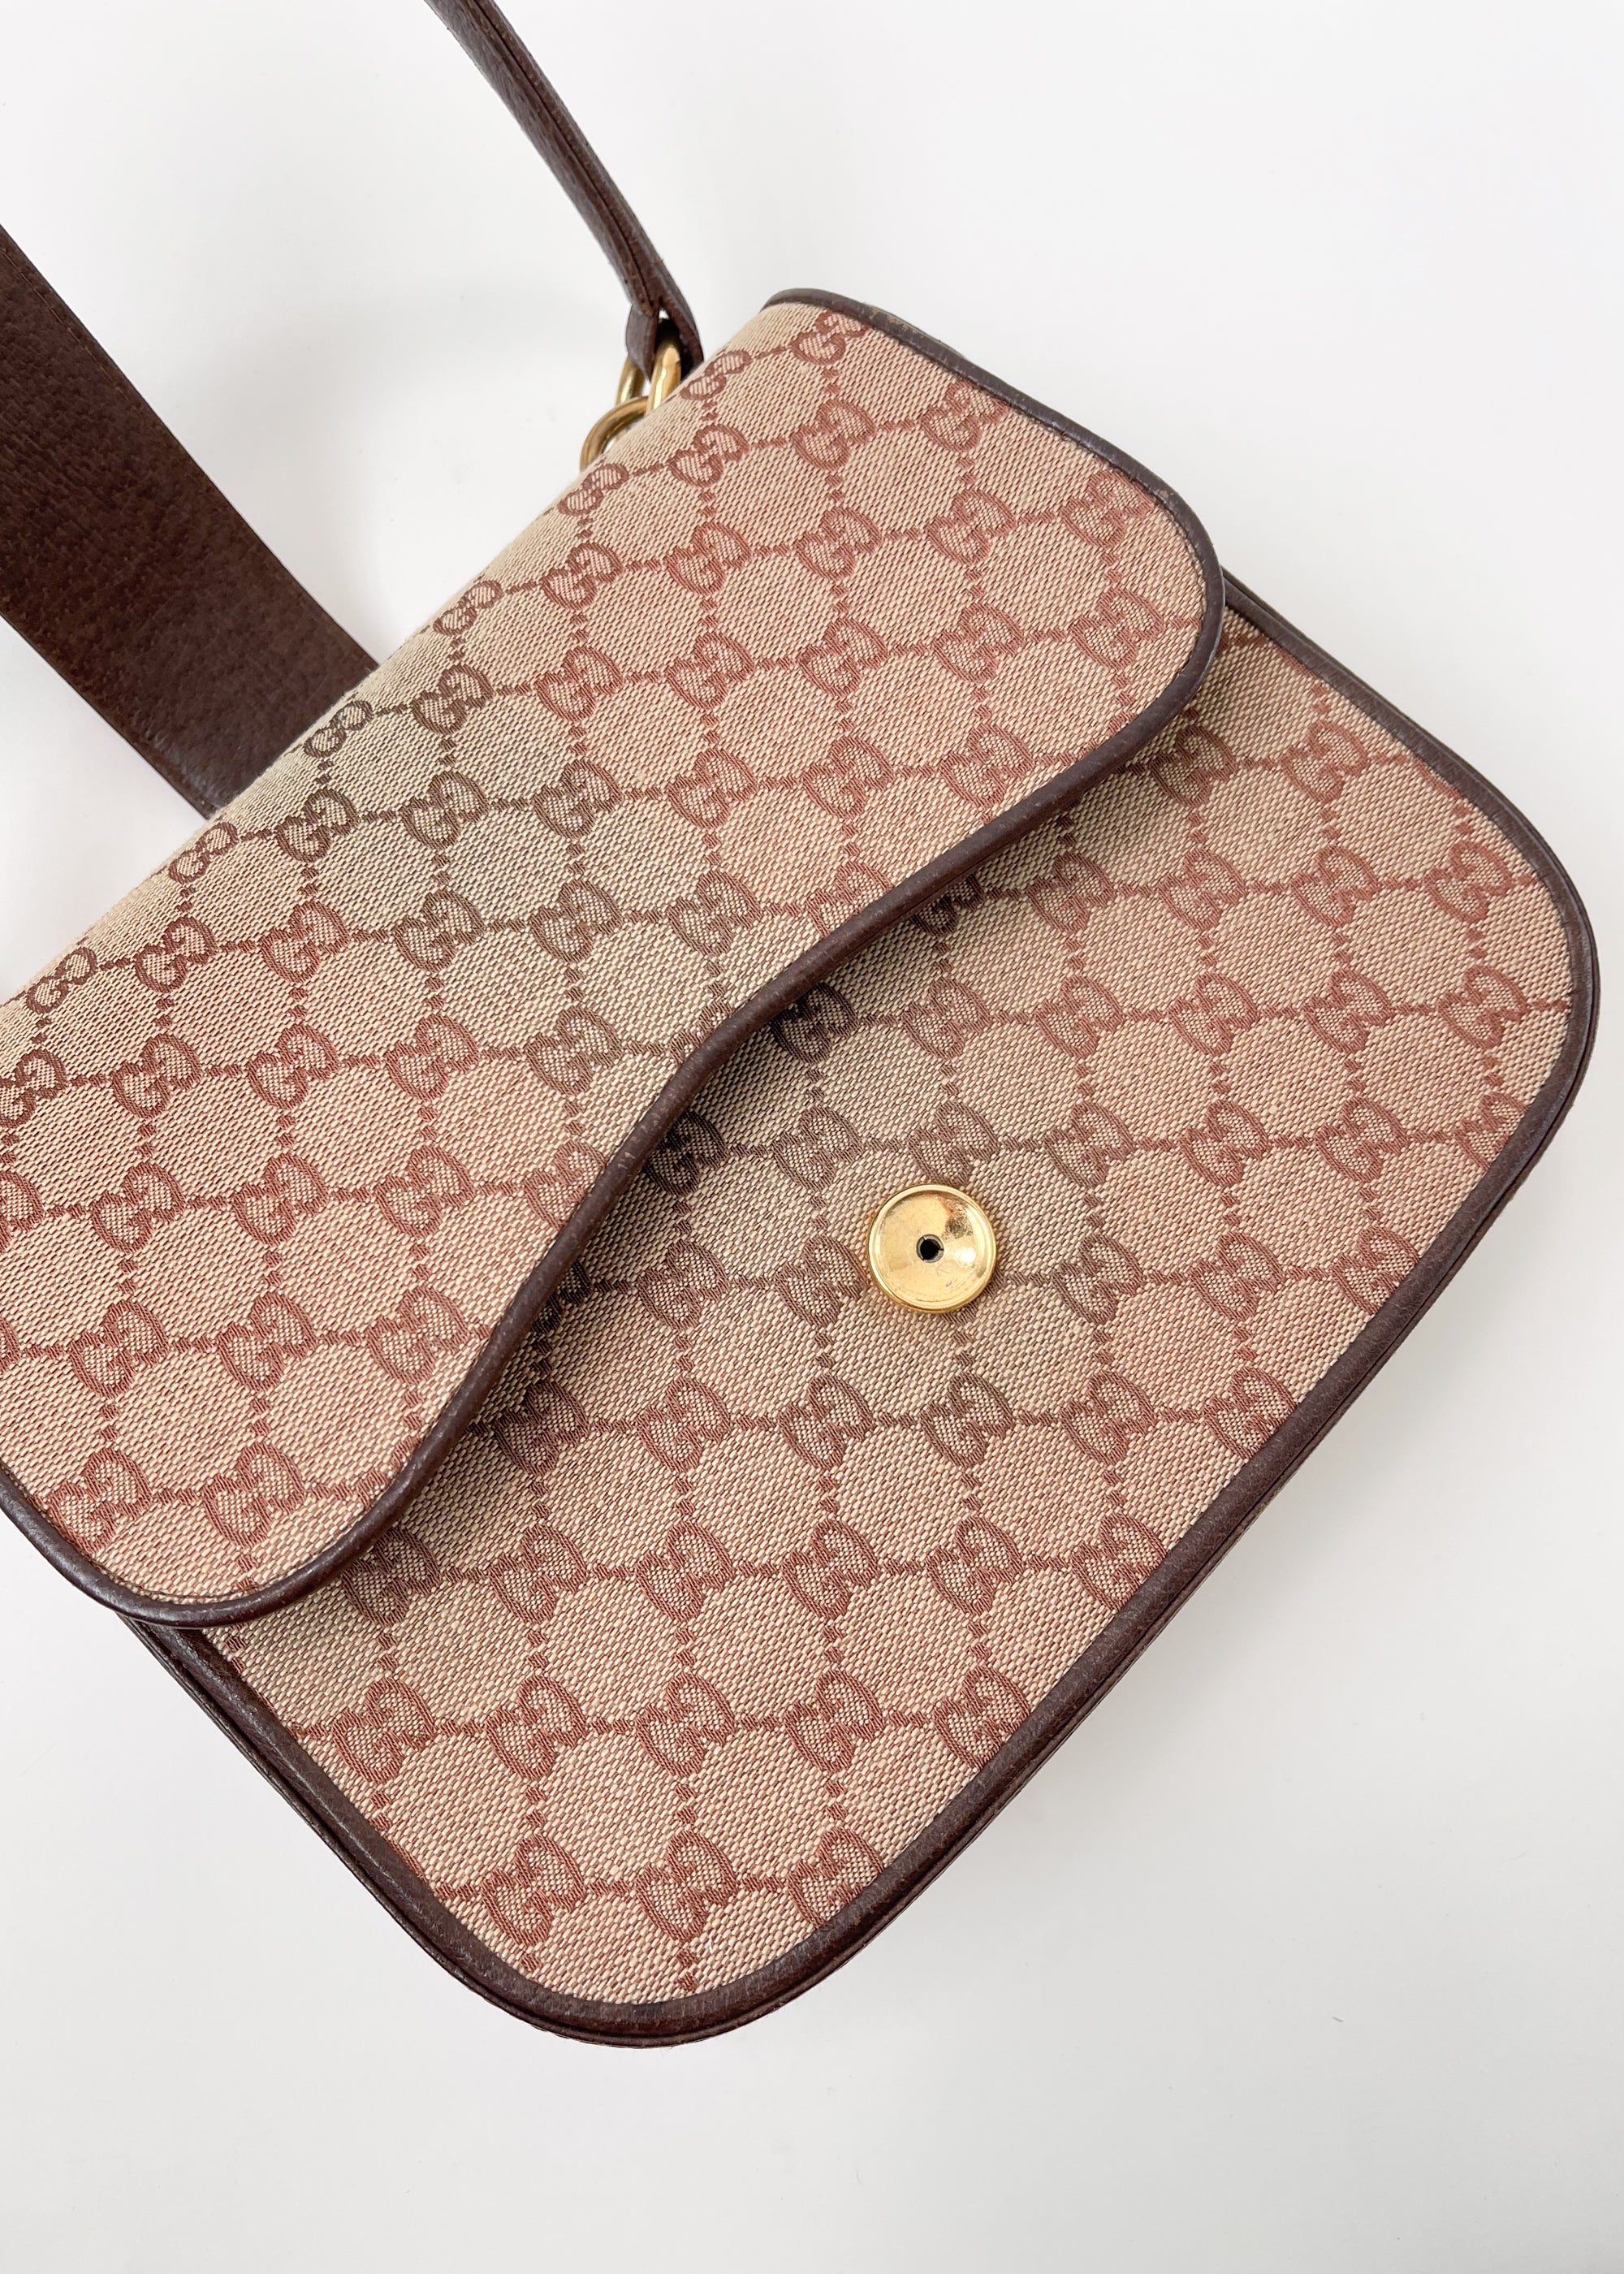 Gucci Marmont Bags | COCOON, Luxury Handbag Subscription